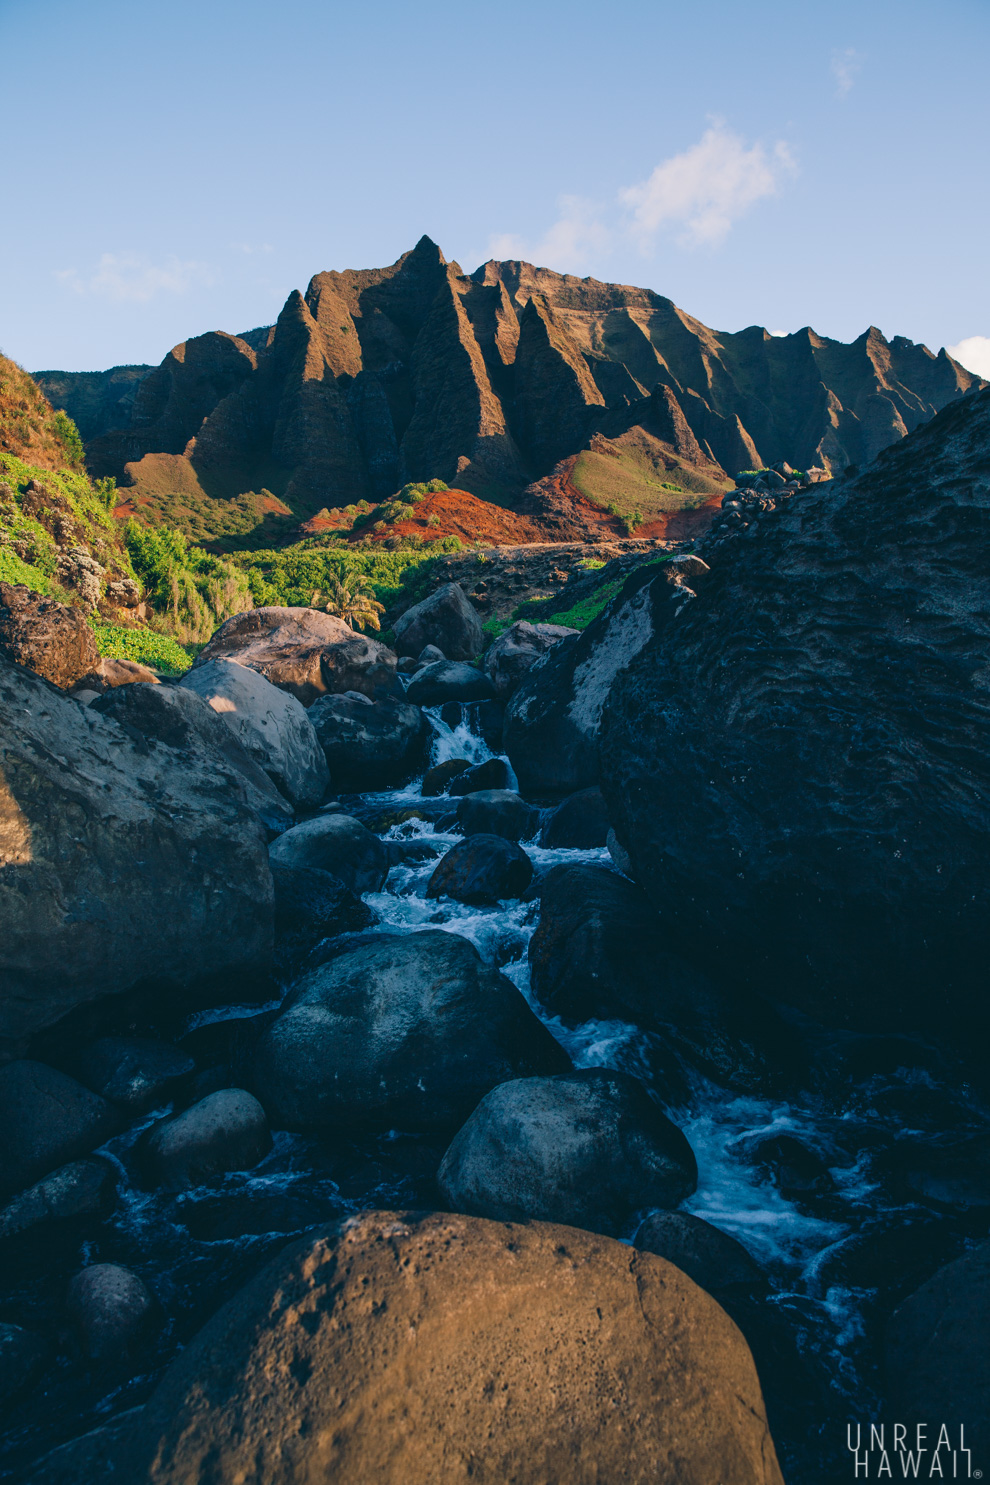 Kalalau Stream and the cliff of Kalalau Valley in the late afternoon. Kauai, Hawaii.